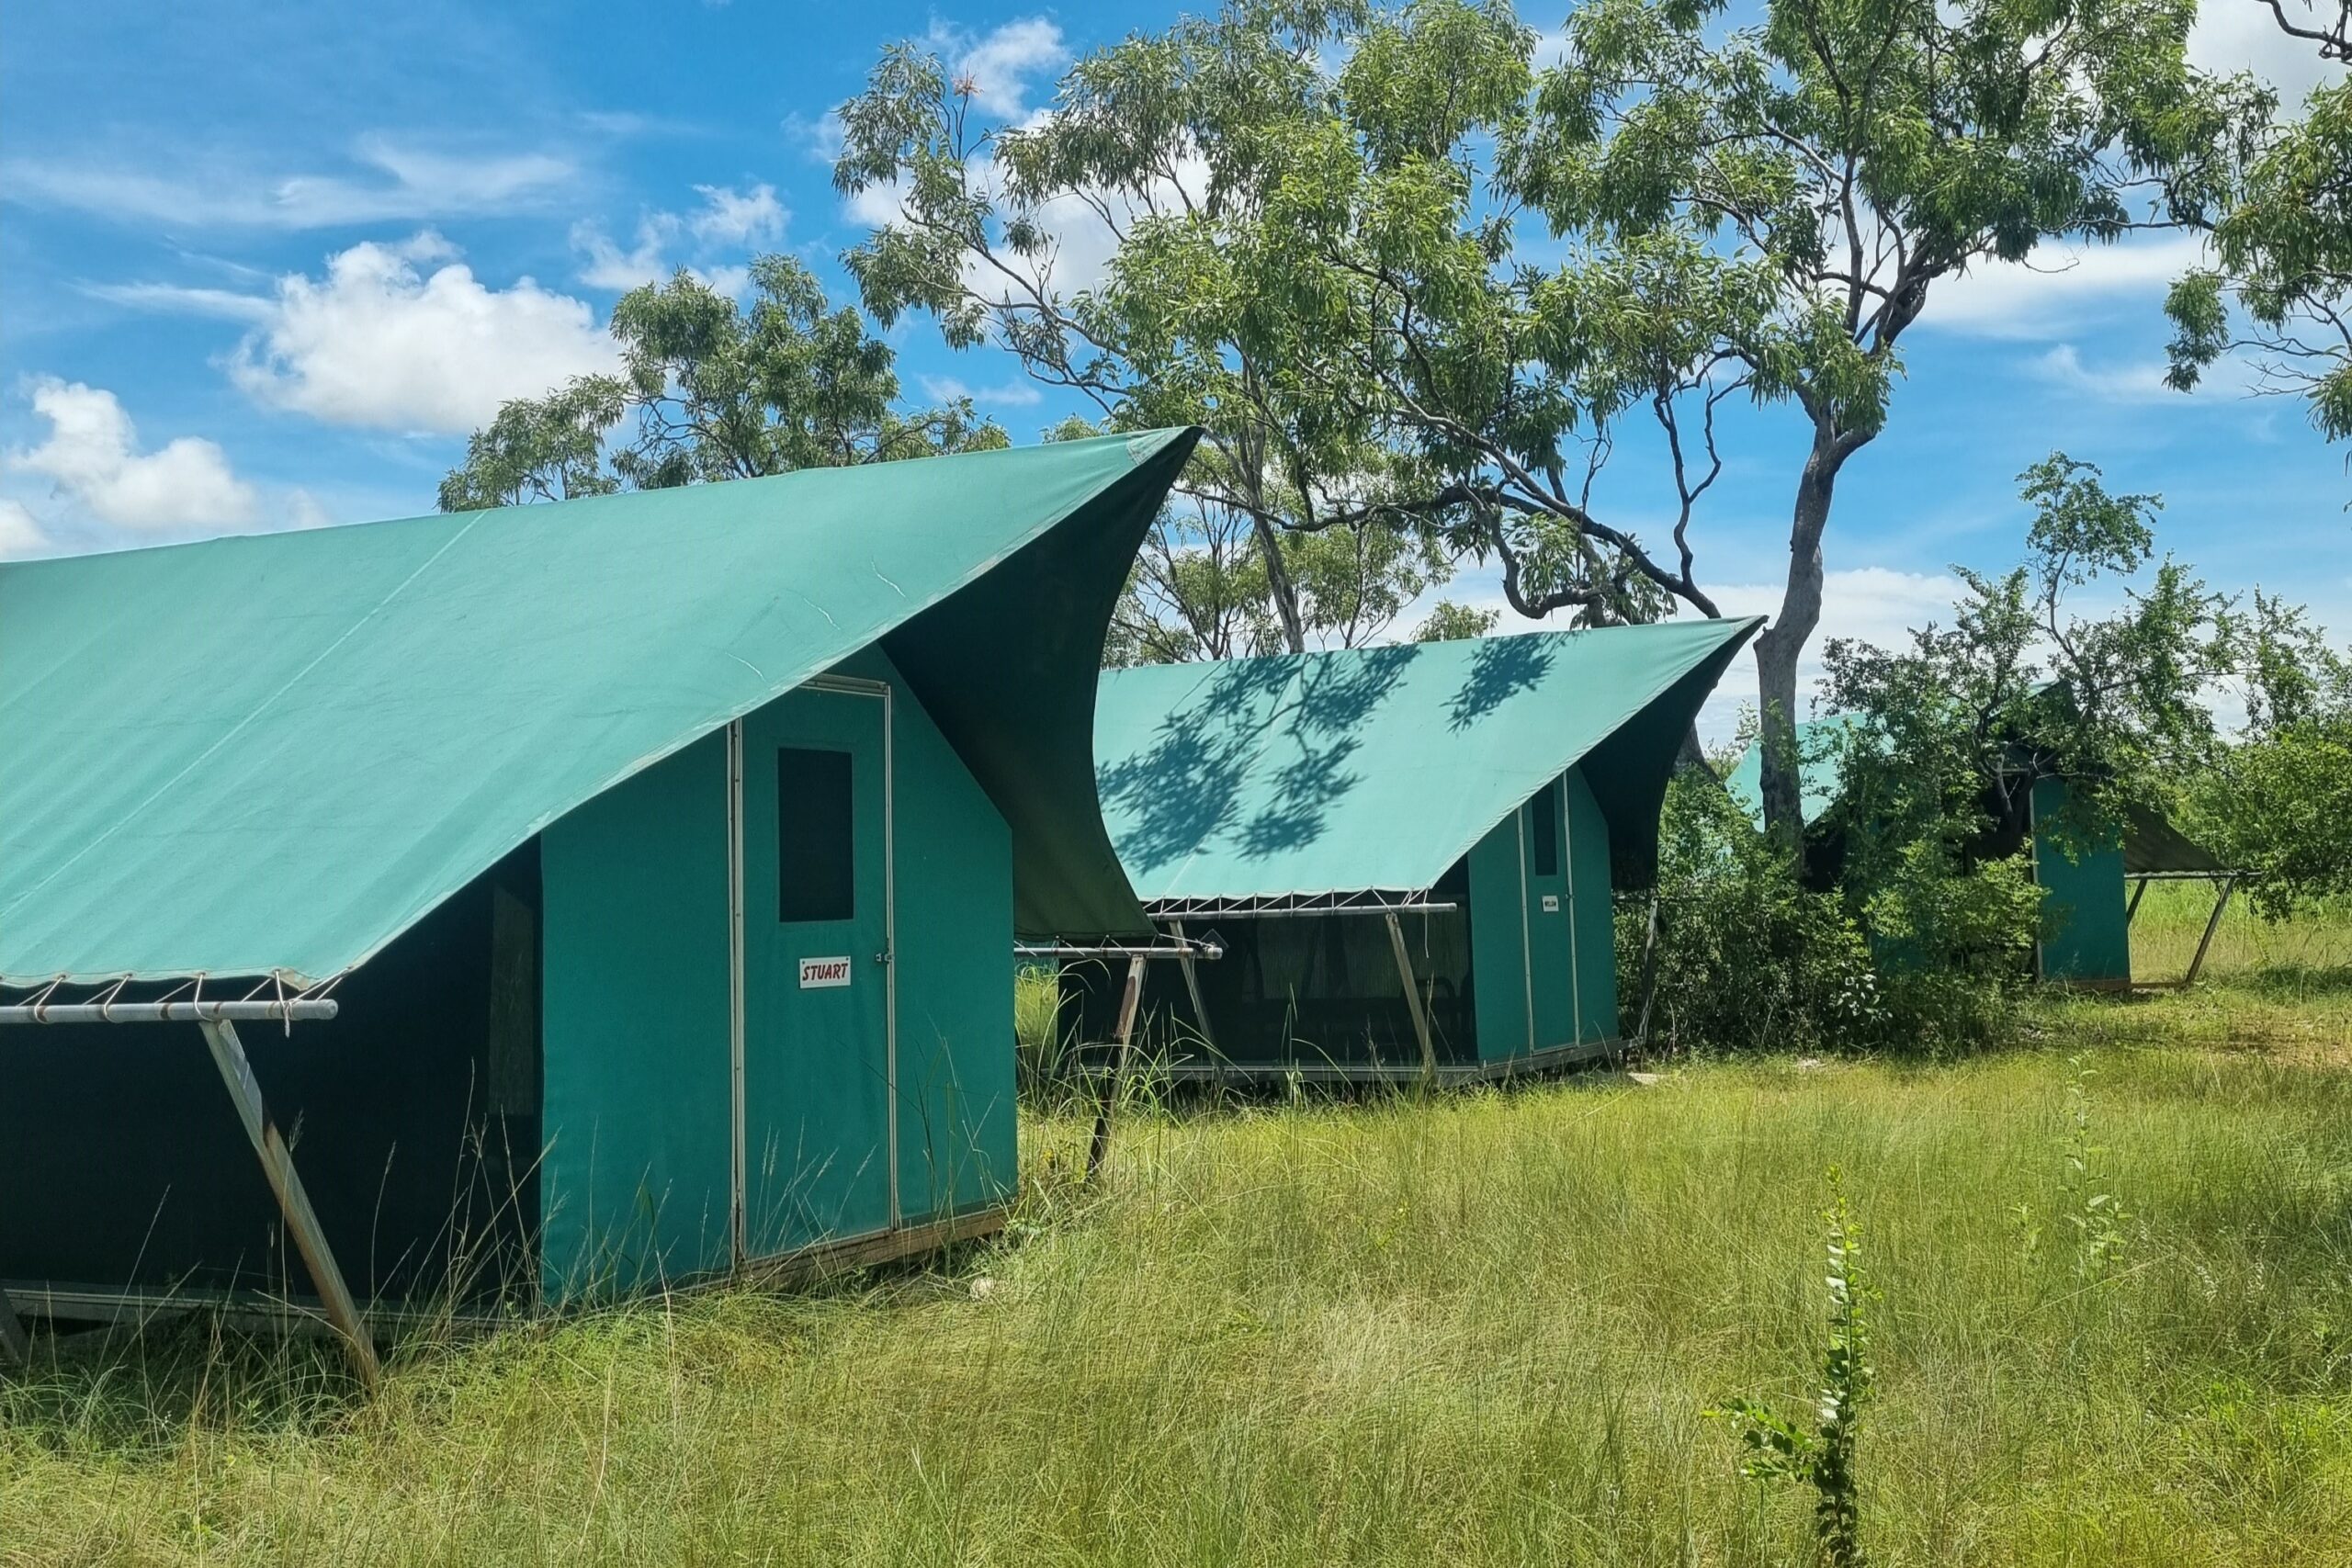 Autopia Tours: Kakadu Katherine Gorge Litchfield 4WD Camping Adventure 5 Day - Safari Tent from Darwin